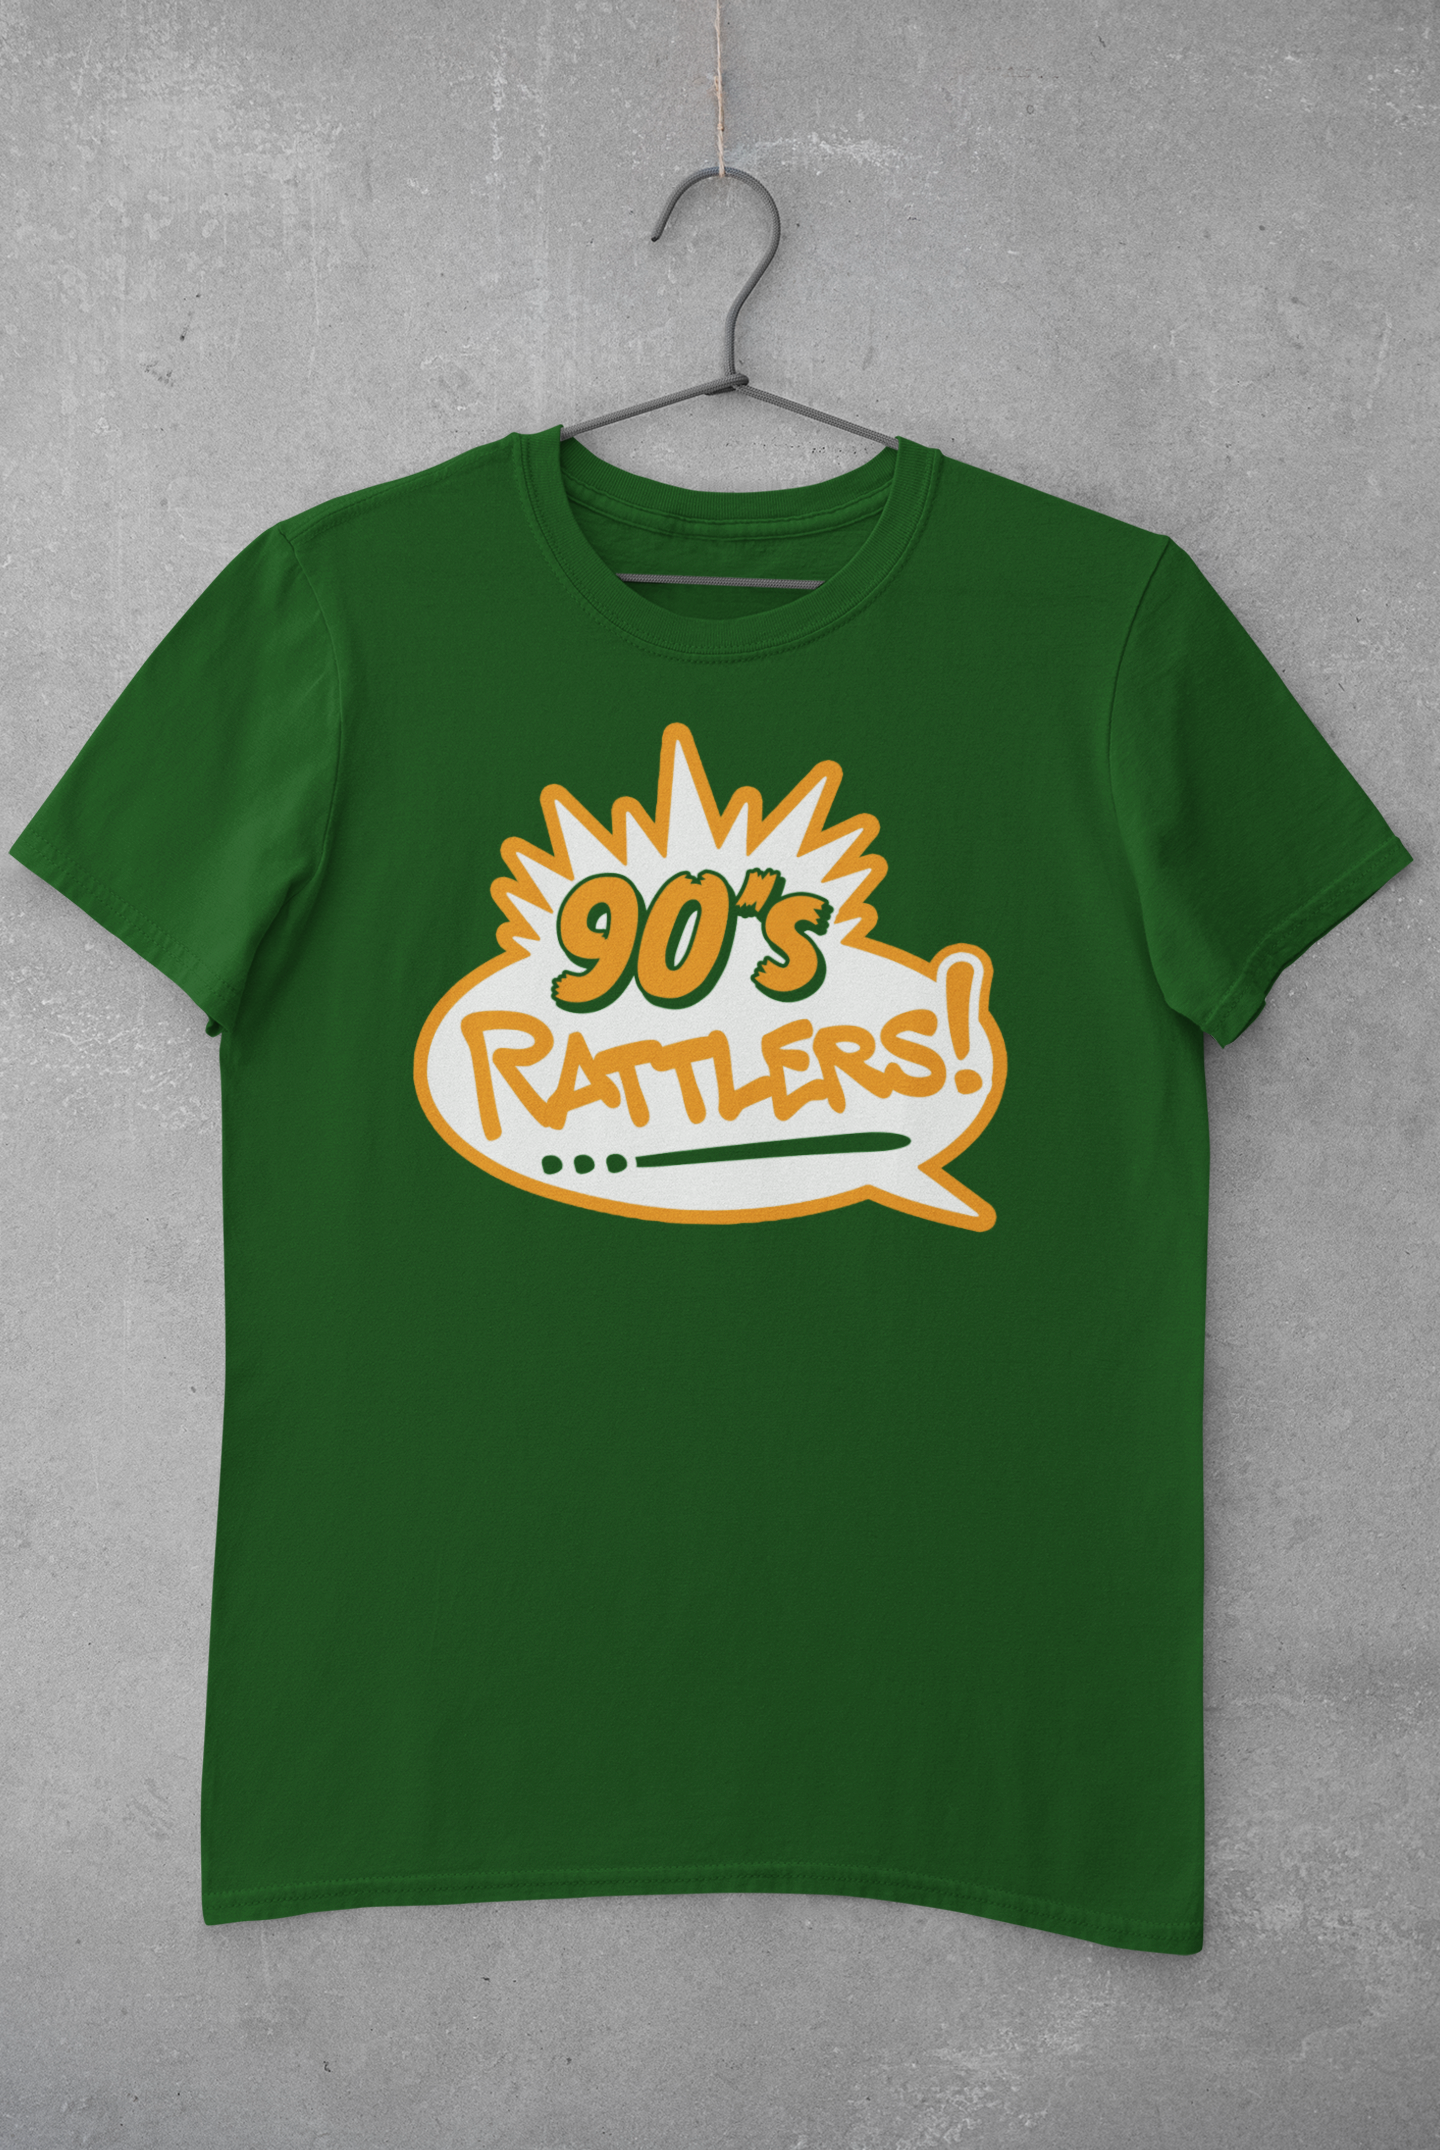 90's Rattlers (Yo! MTV Raps Style) T-shirt